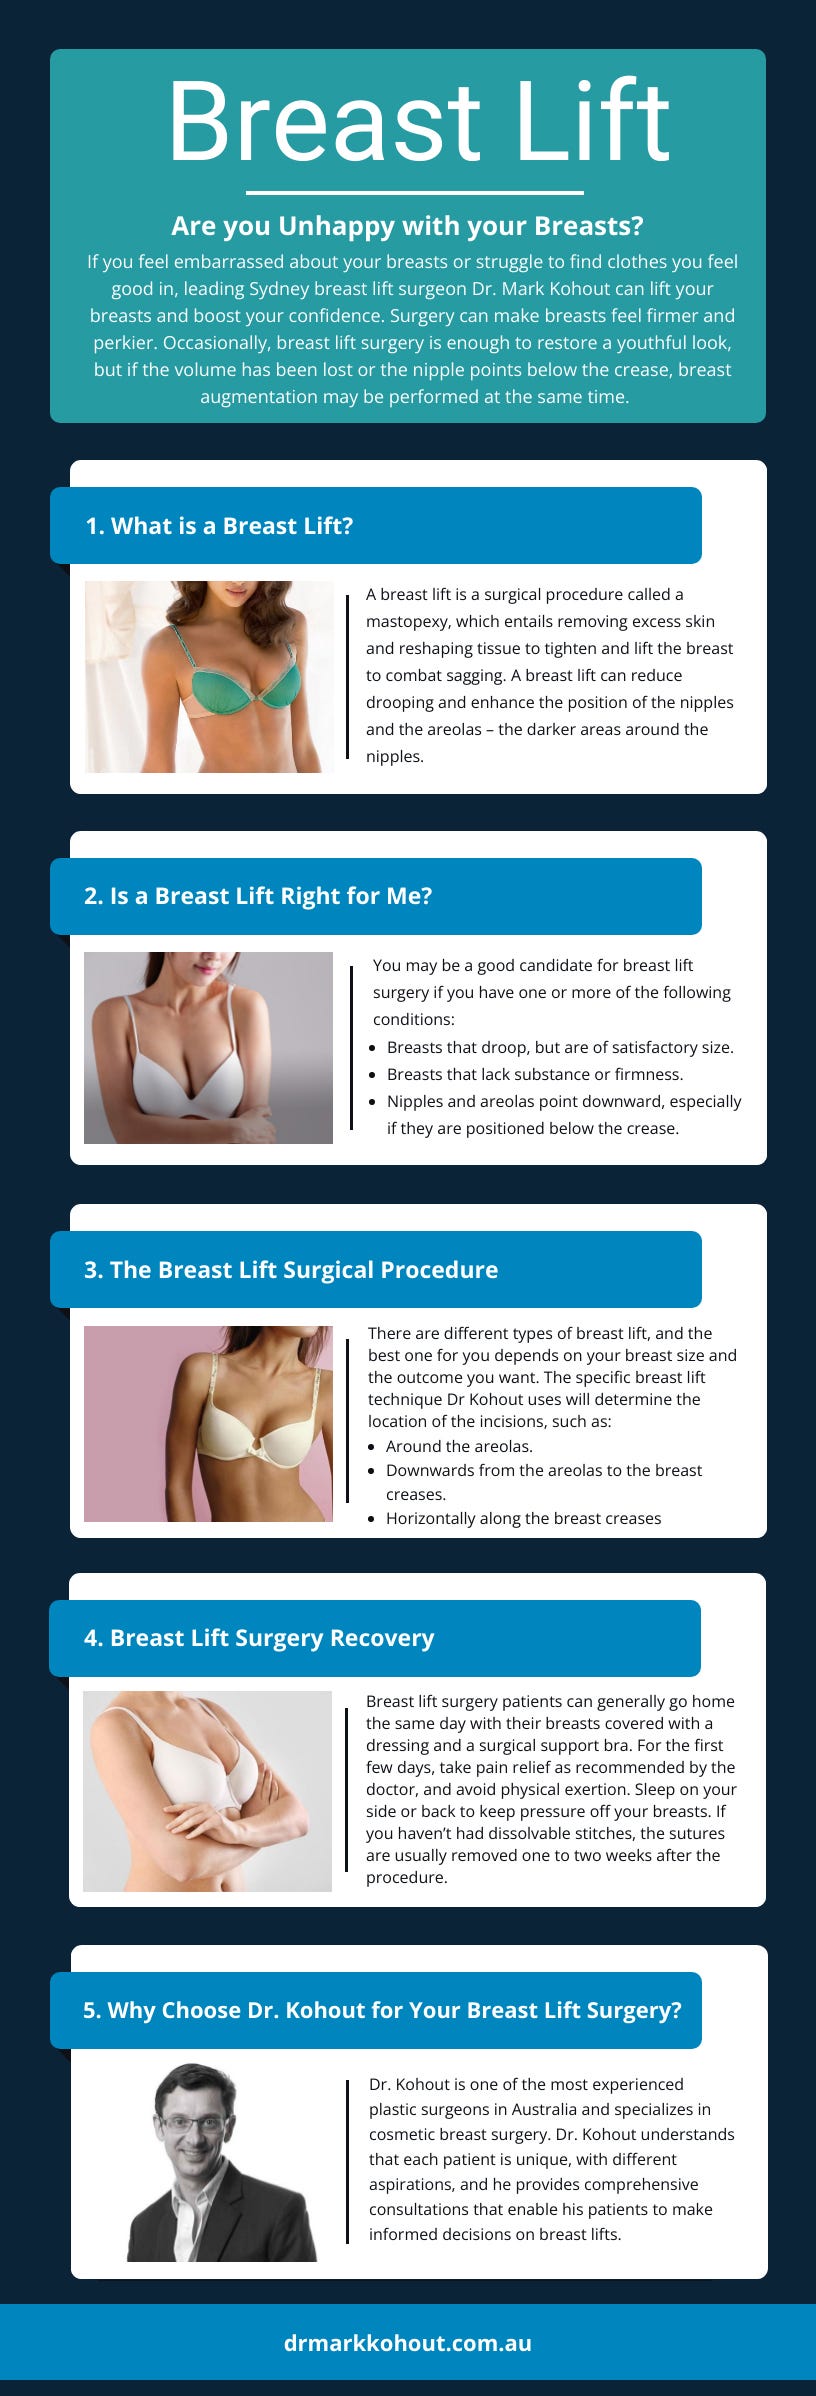 Breast augmentation vs breast lift - picking the right procedure